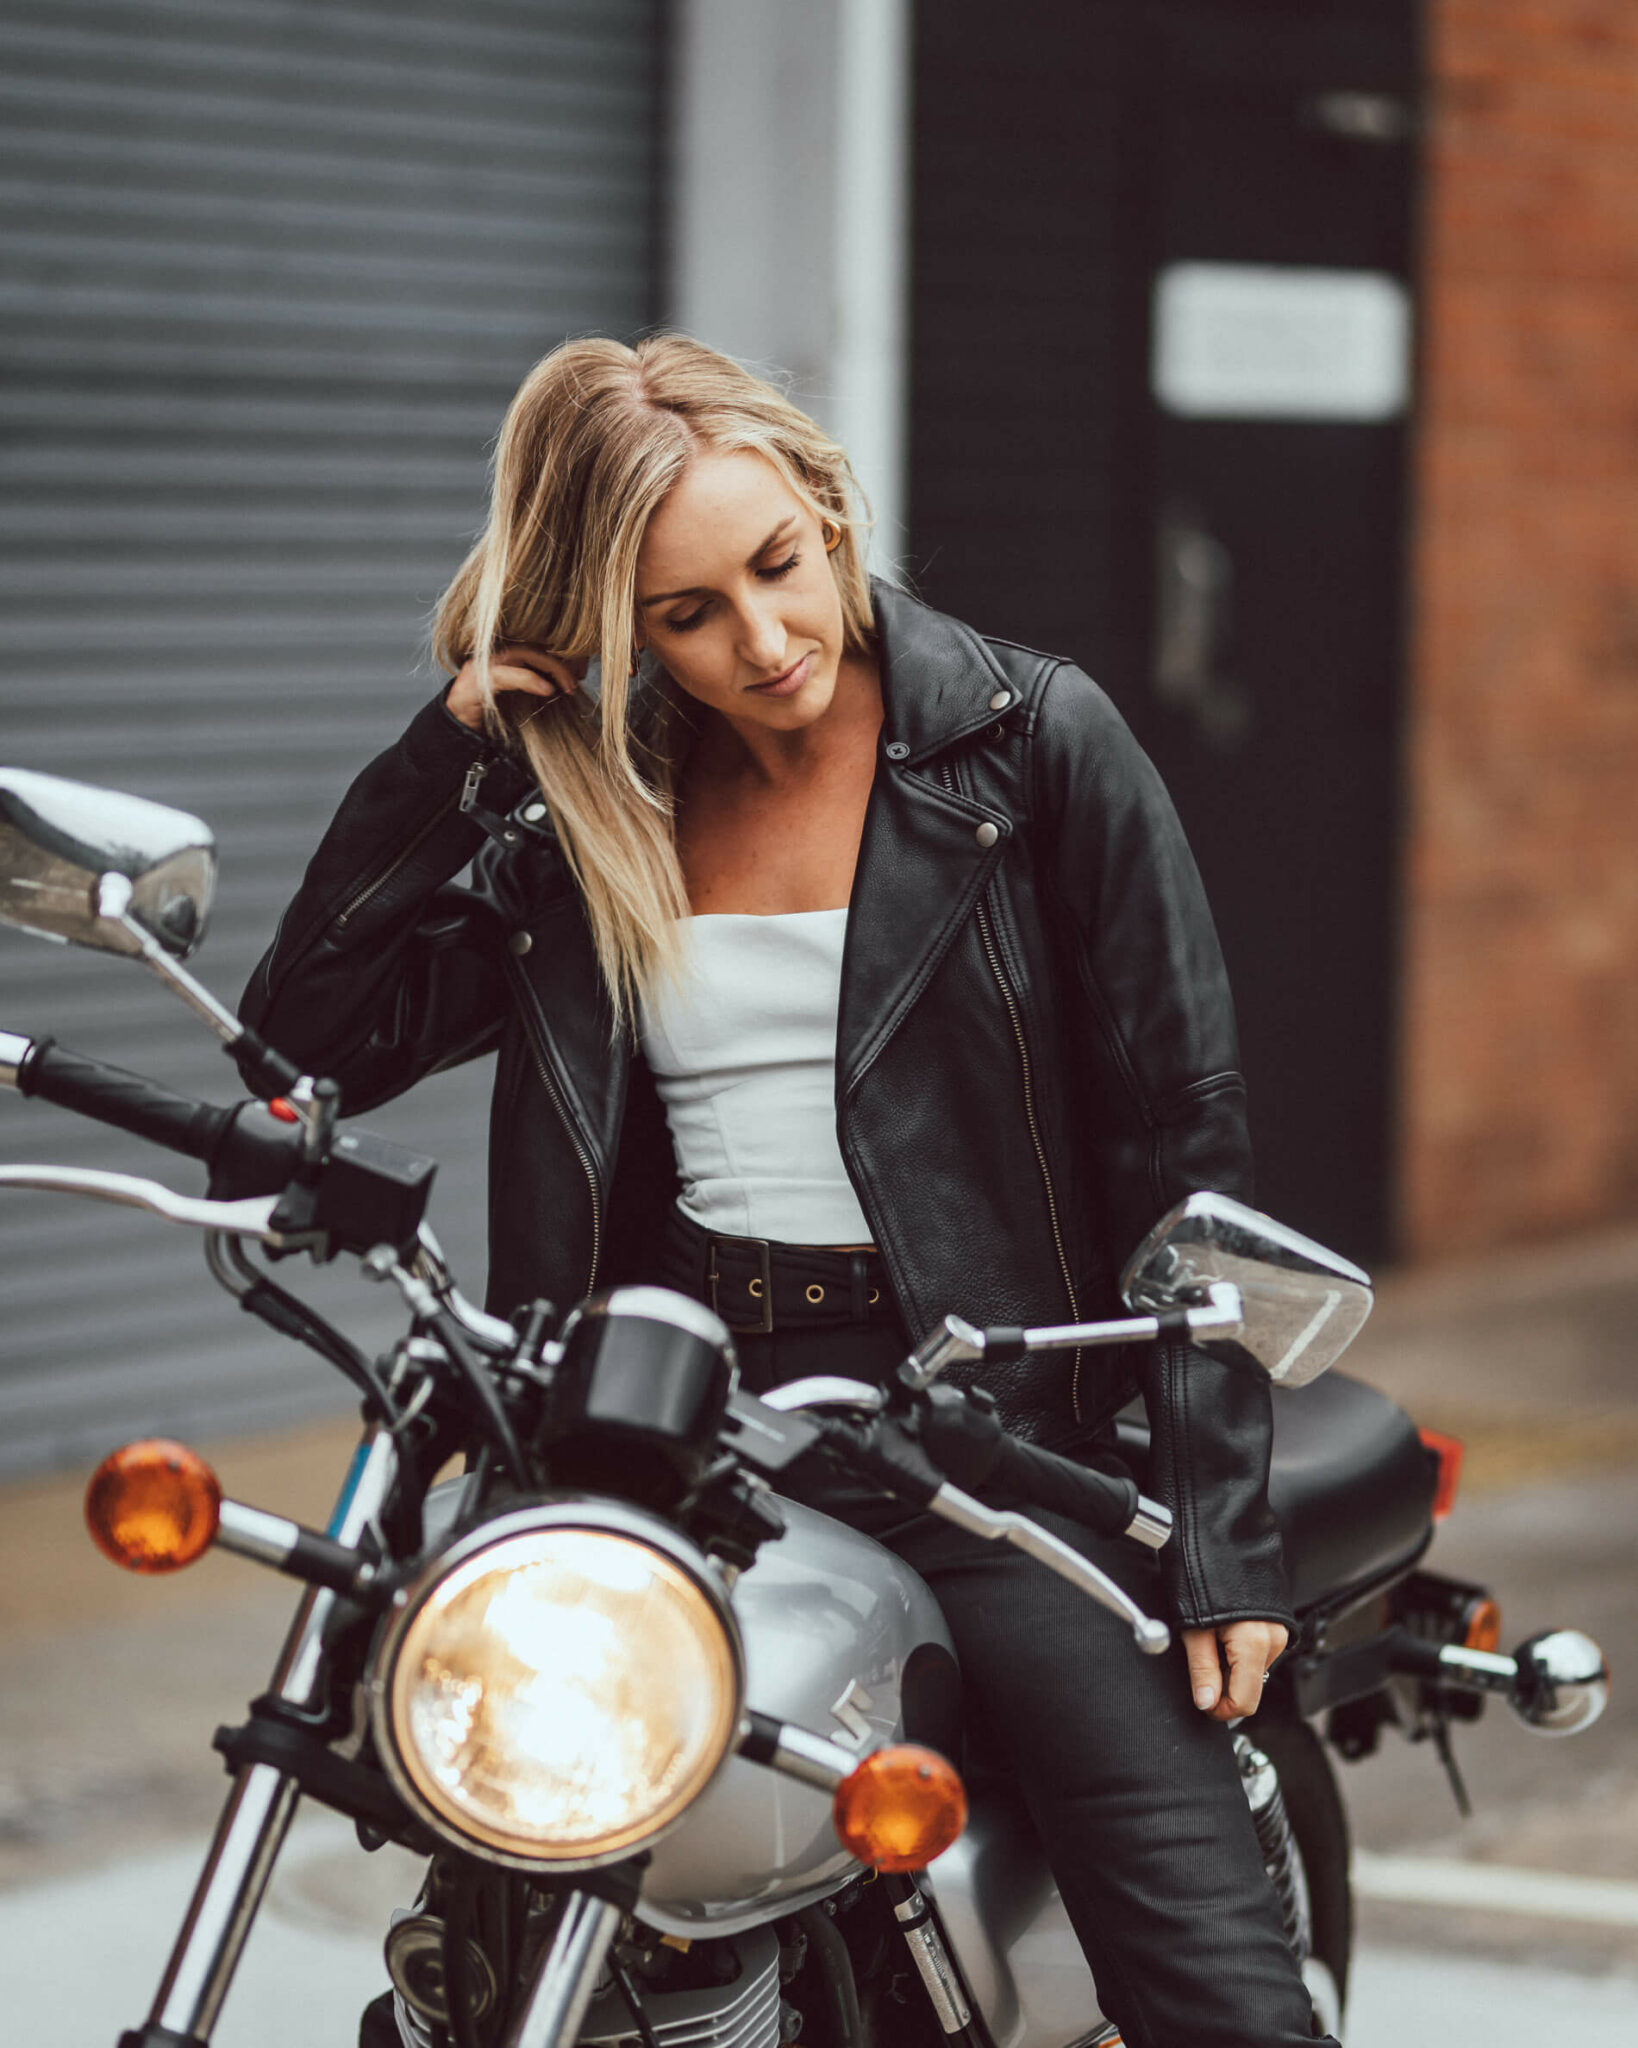 Blackbird Motorcycle Wear’s ‘Fly By Night’ Leather Jacket